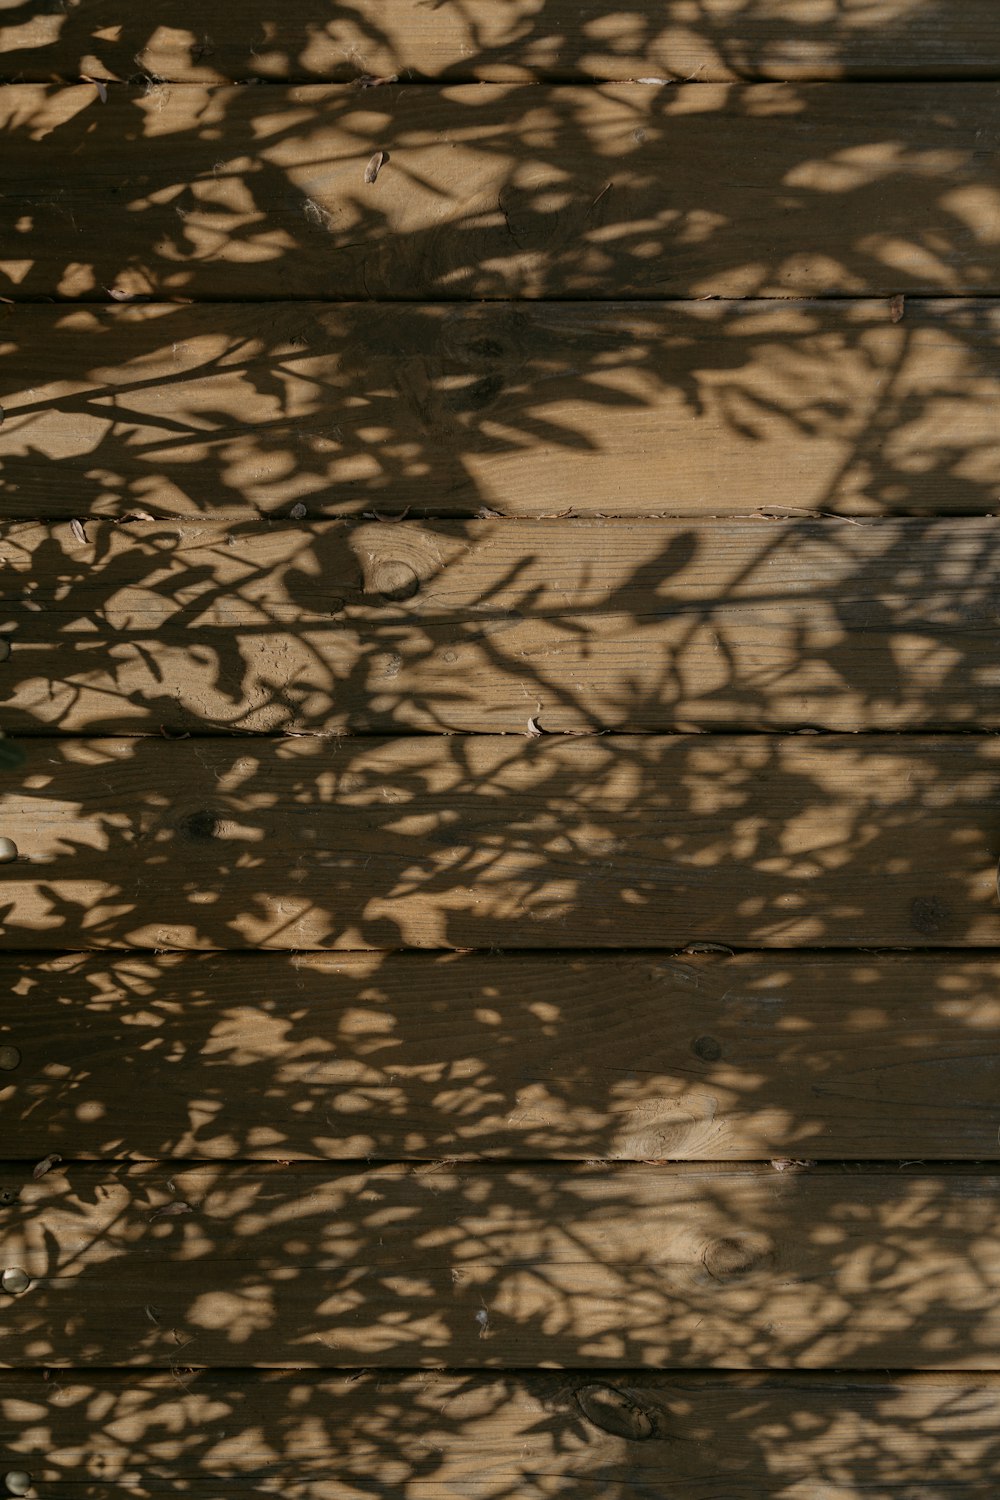 silhouette of trees on brown wooden boardwalk